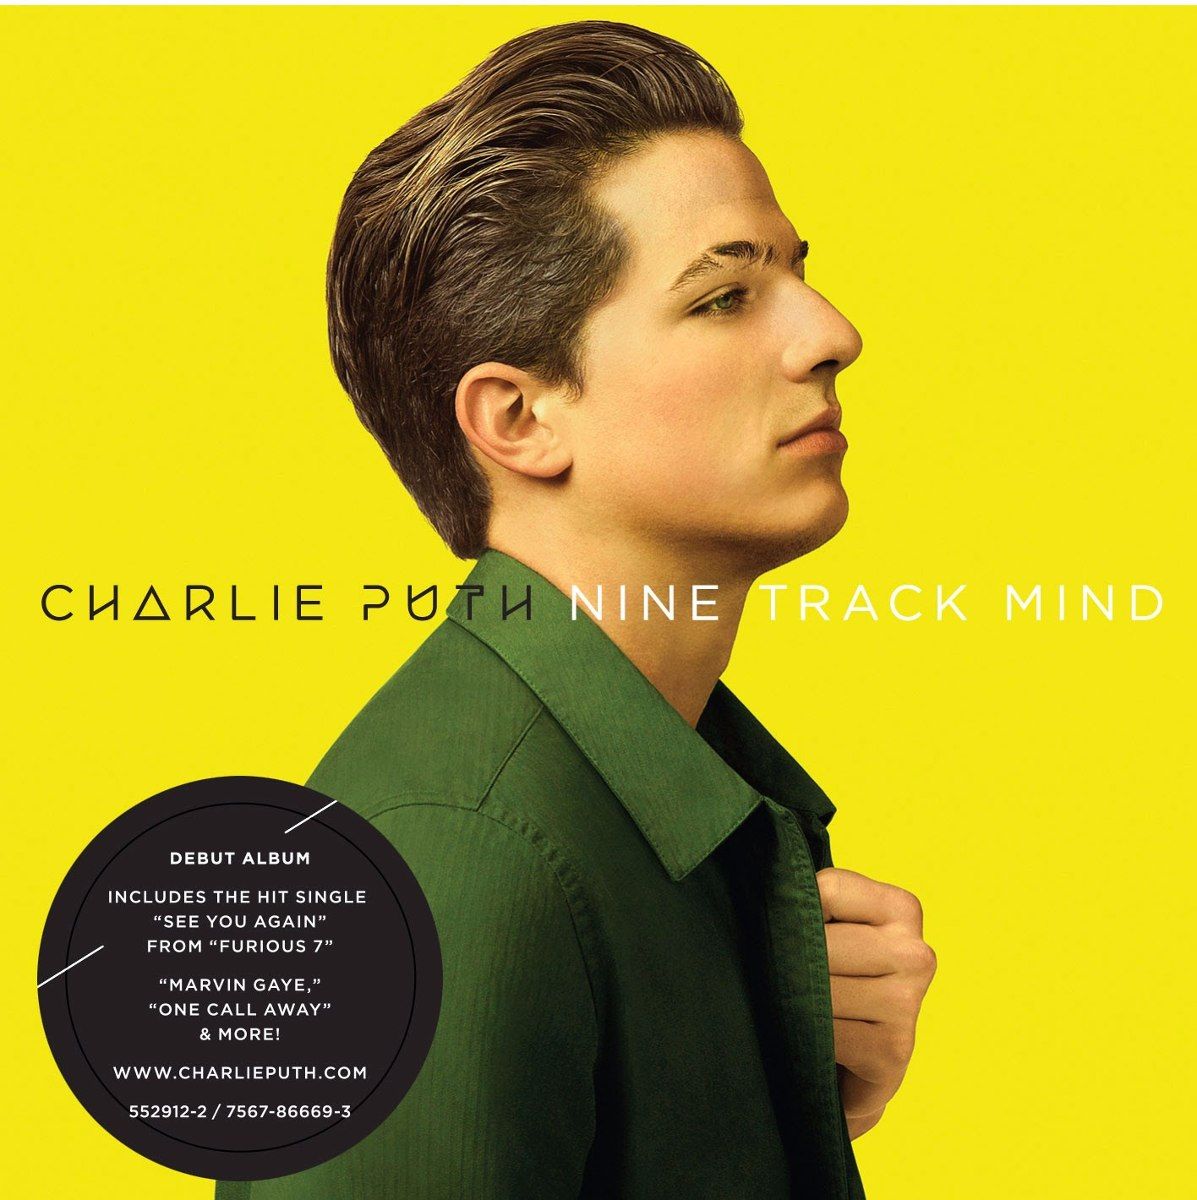 5. Nine Track Mind - Charlie Puth